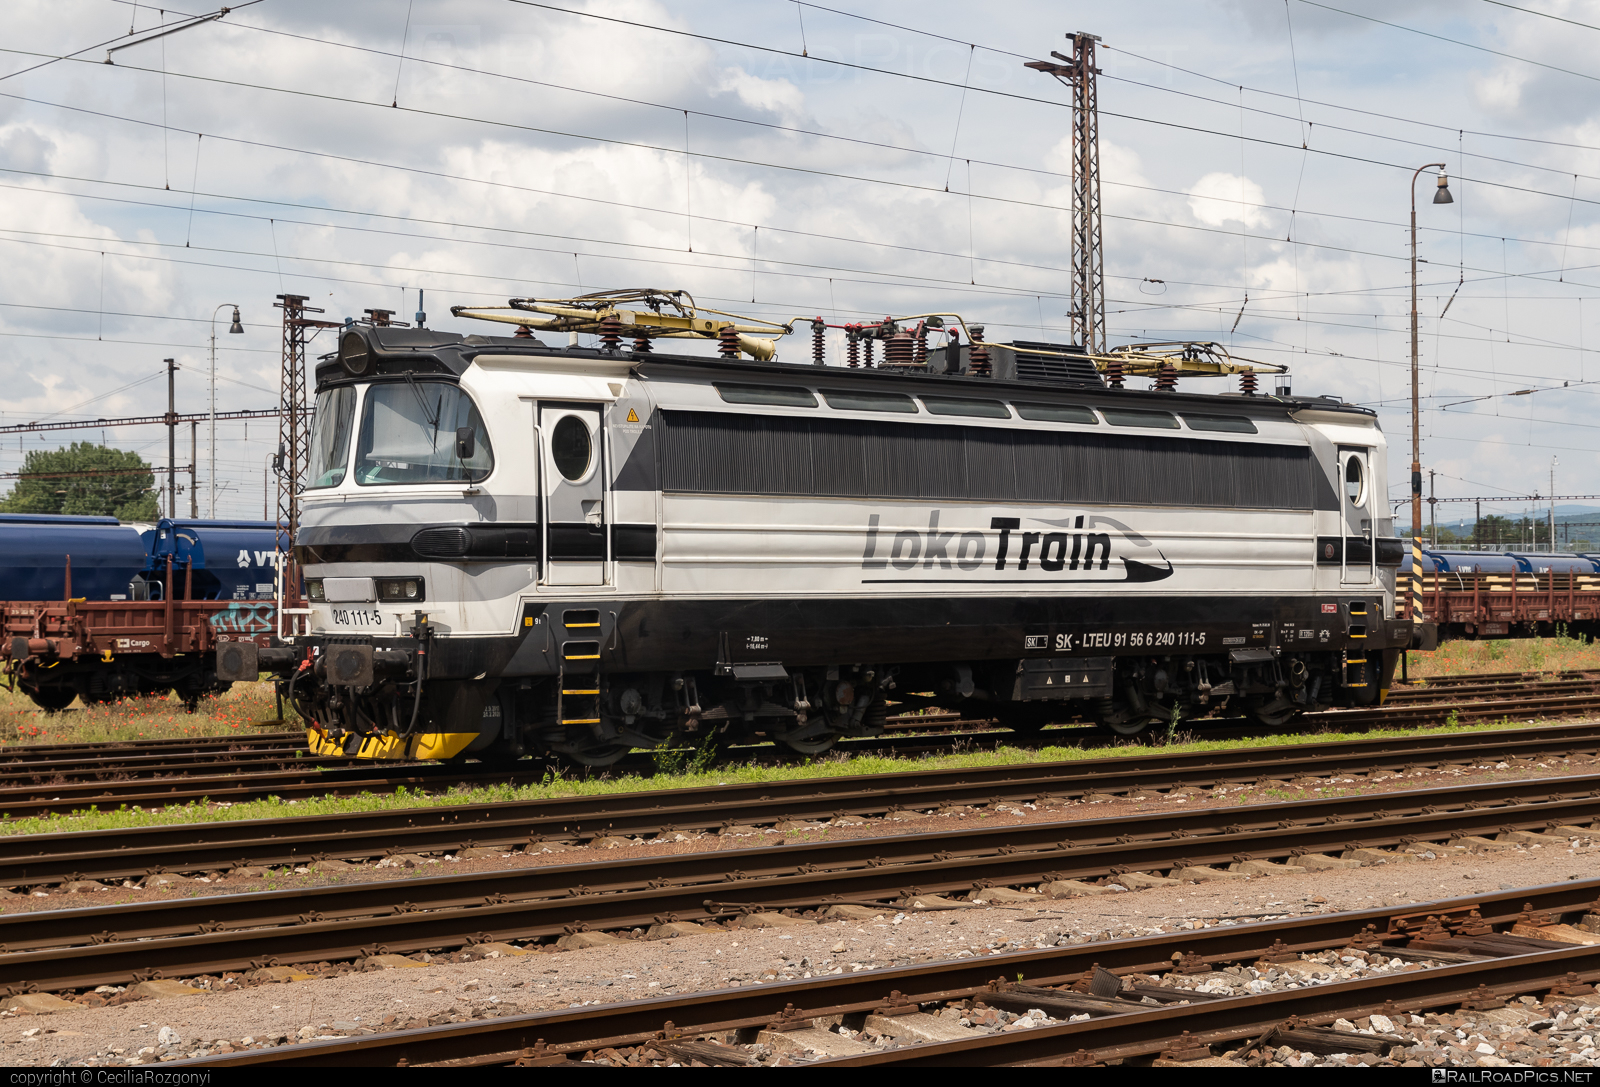 Škoda 47E - 240 111-5 operated by Loko Train s.r.o. #laminatka #locomotive240 #lokotrain #lokotrainsro #skoda #skoda47e